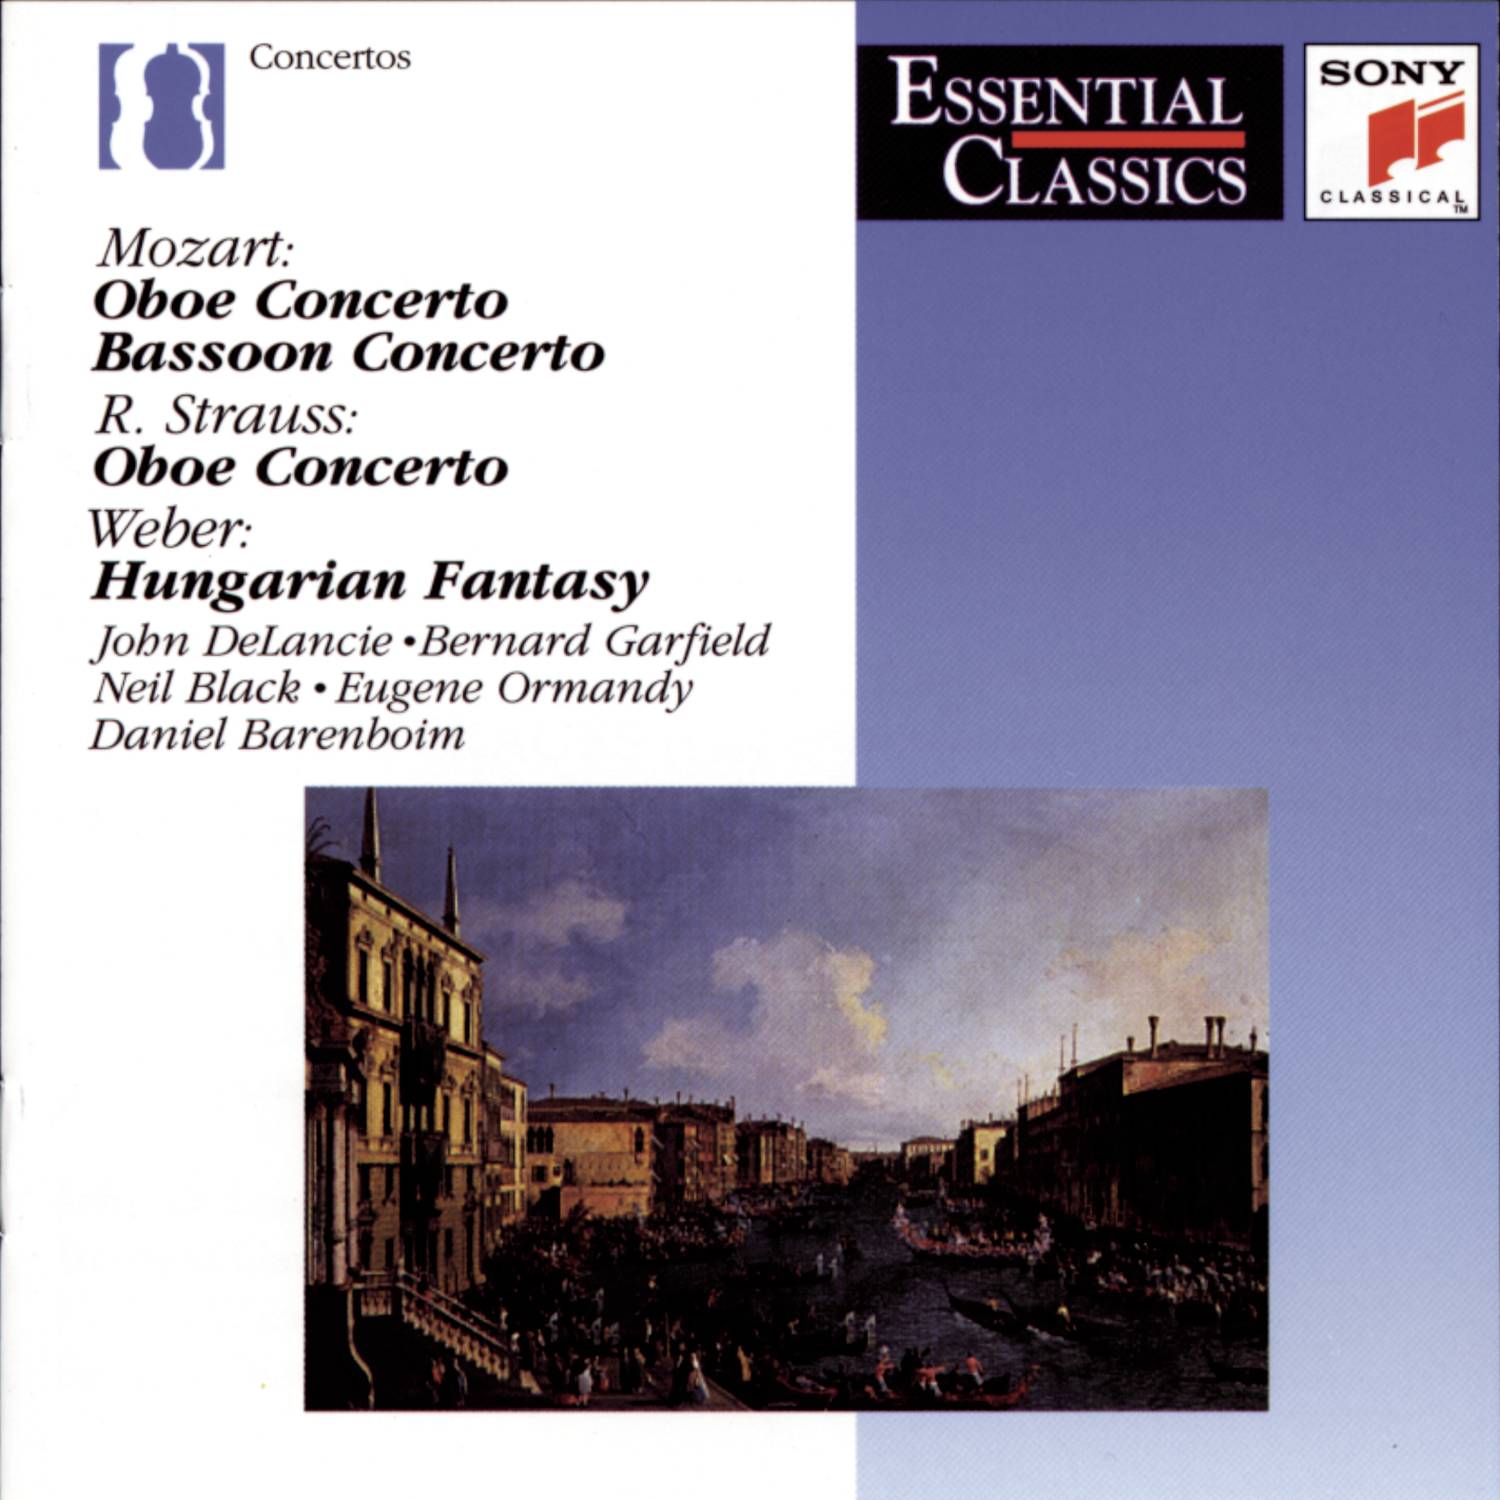 Concerto for Bassoon and Orchestra in B-flat Major, K.191 (186e): II. Andante ma adagio